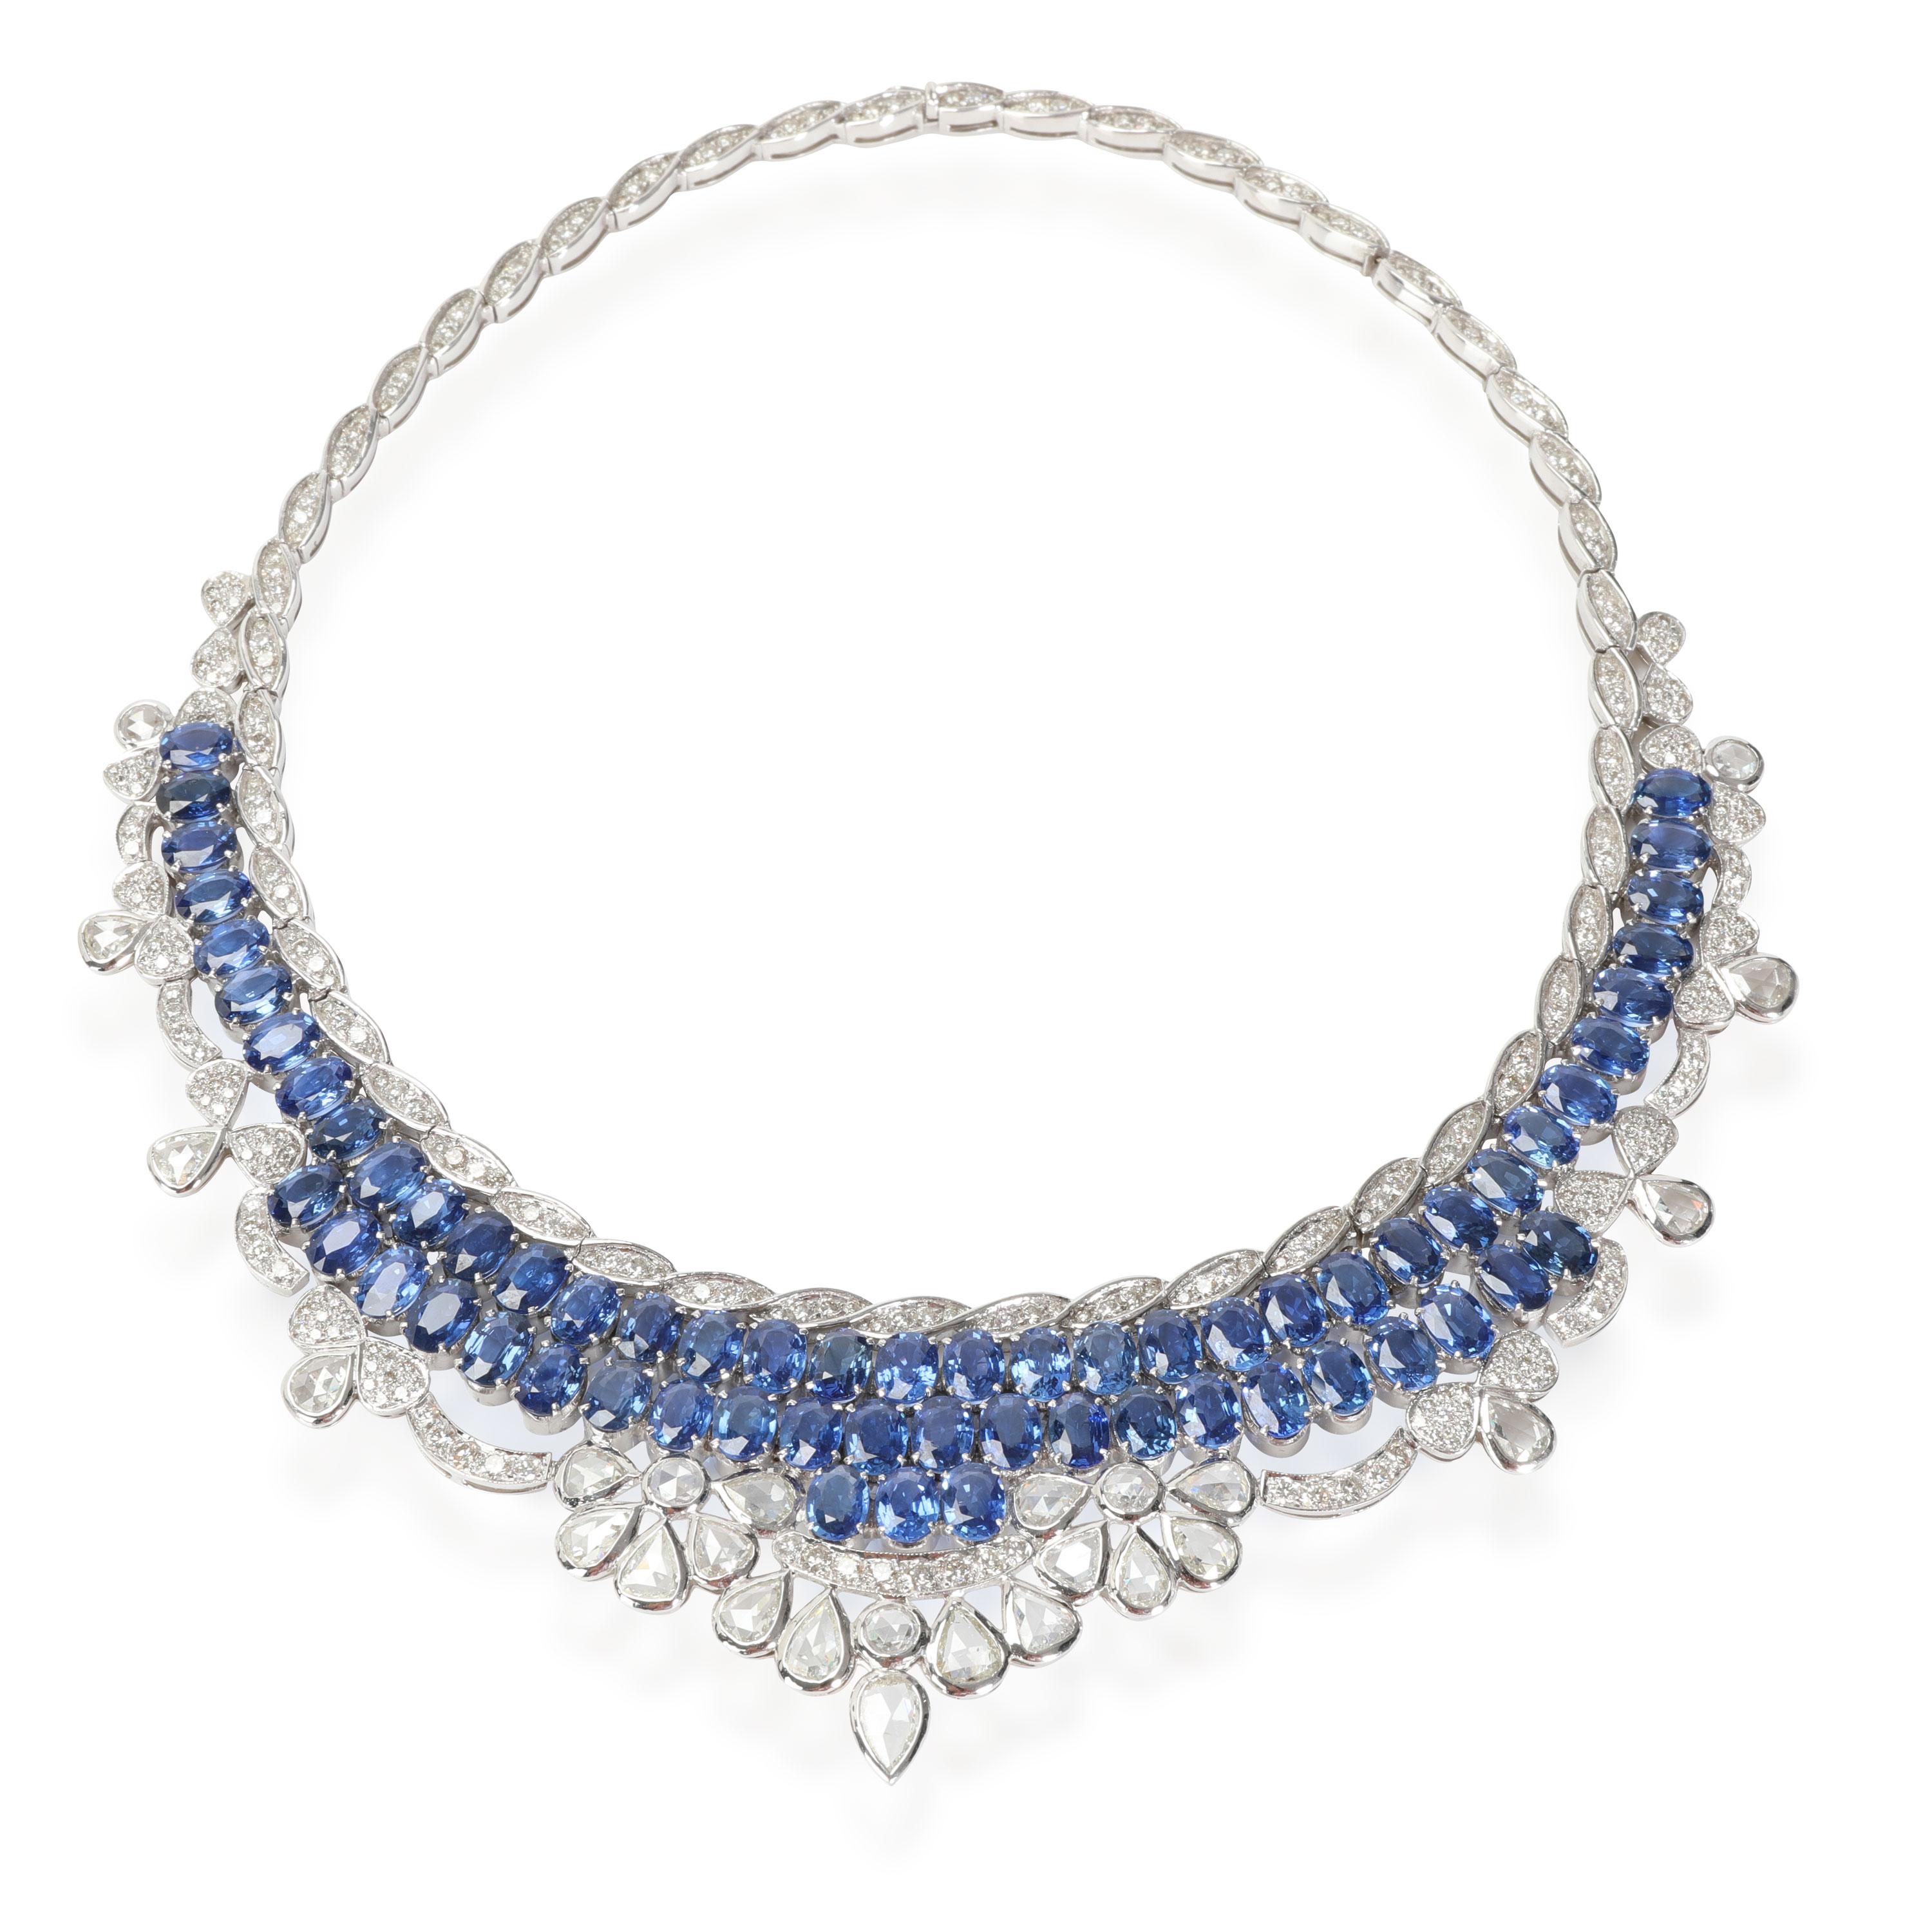 Oval Cut Sapphires & Diamond Bib Style Statement Necklace 18K White Gold 65.78 Ctw